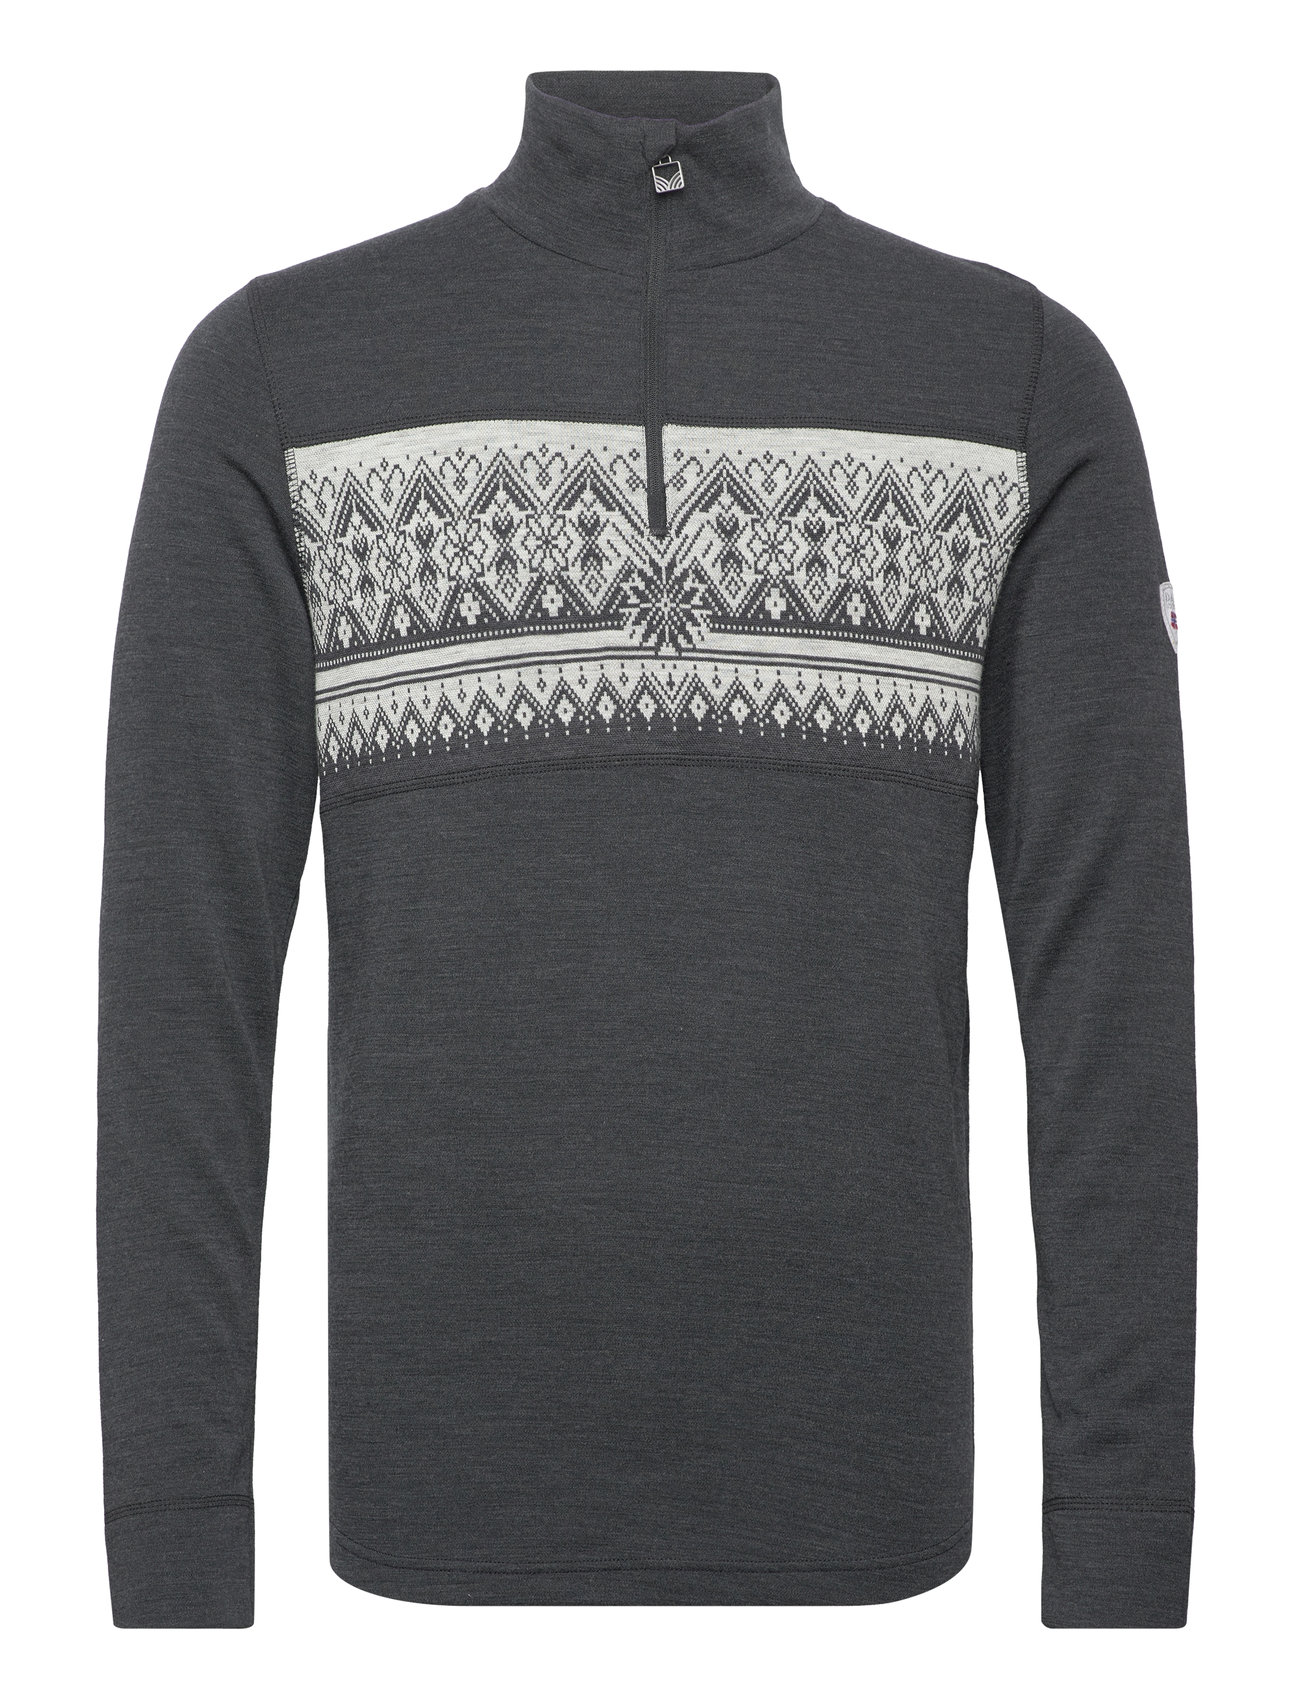 Moritz Masc Basic Sweater Tops Knitwear Half Zip Jumpers Grey Dale Of Norway